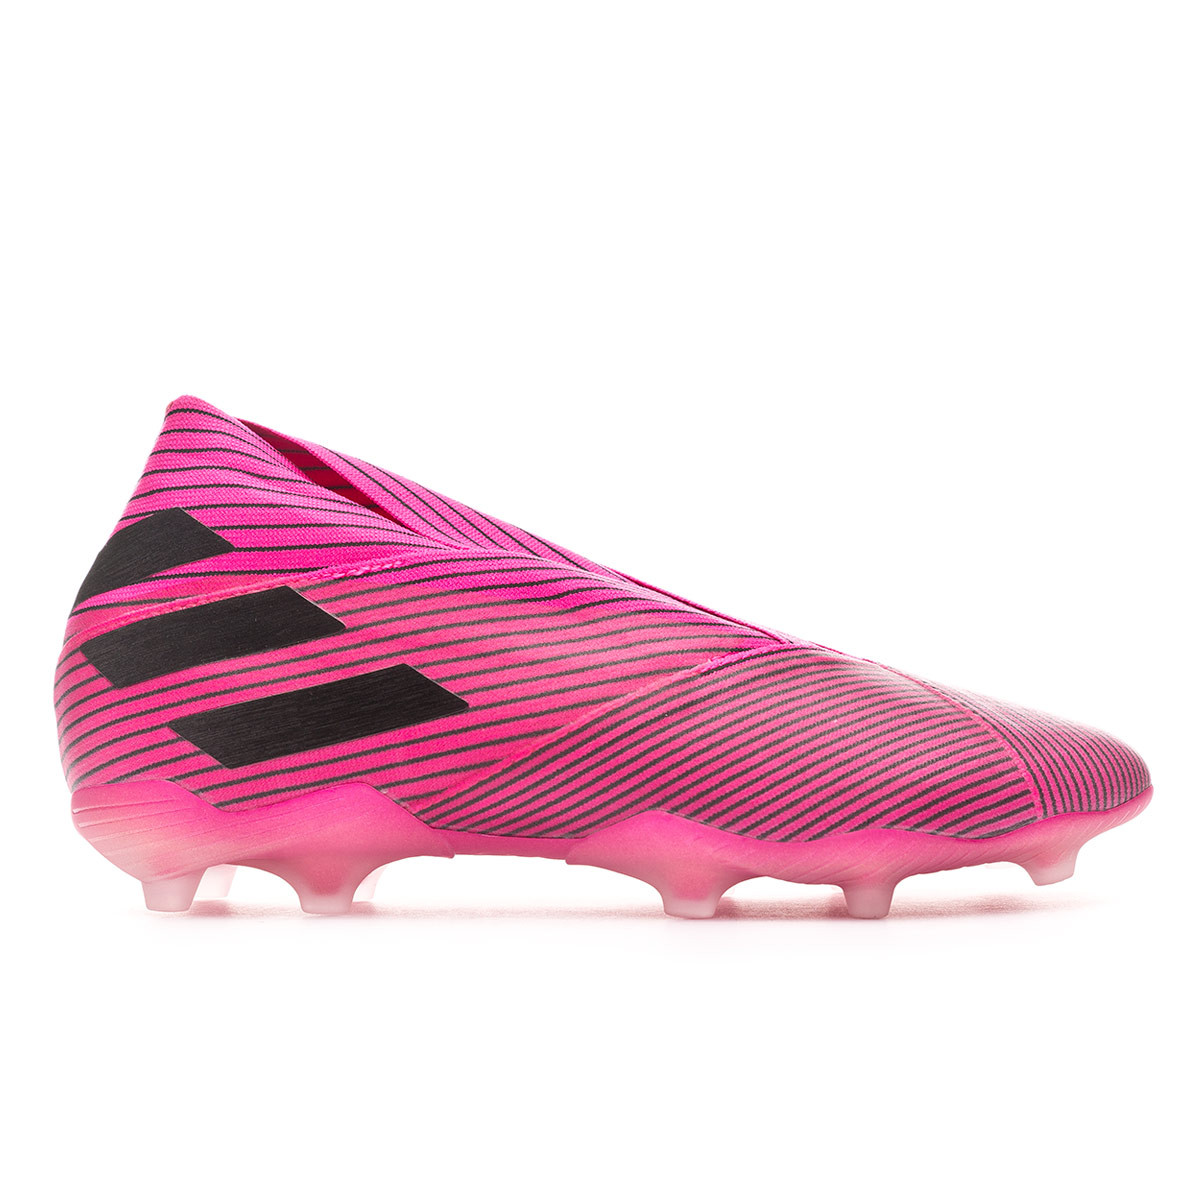 Bota de fútbol adidas Nemeziz 19+ FG Niño Shock pink-Core black-Shock pink  - Tienda de fútbol Fútbol Emotion